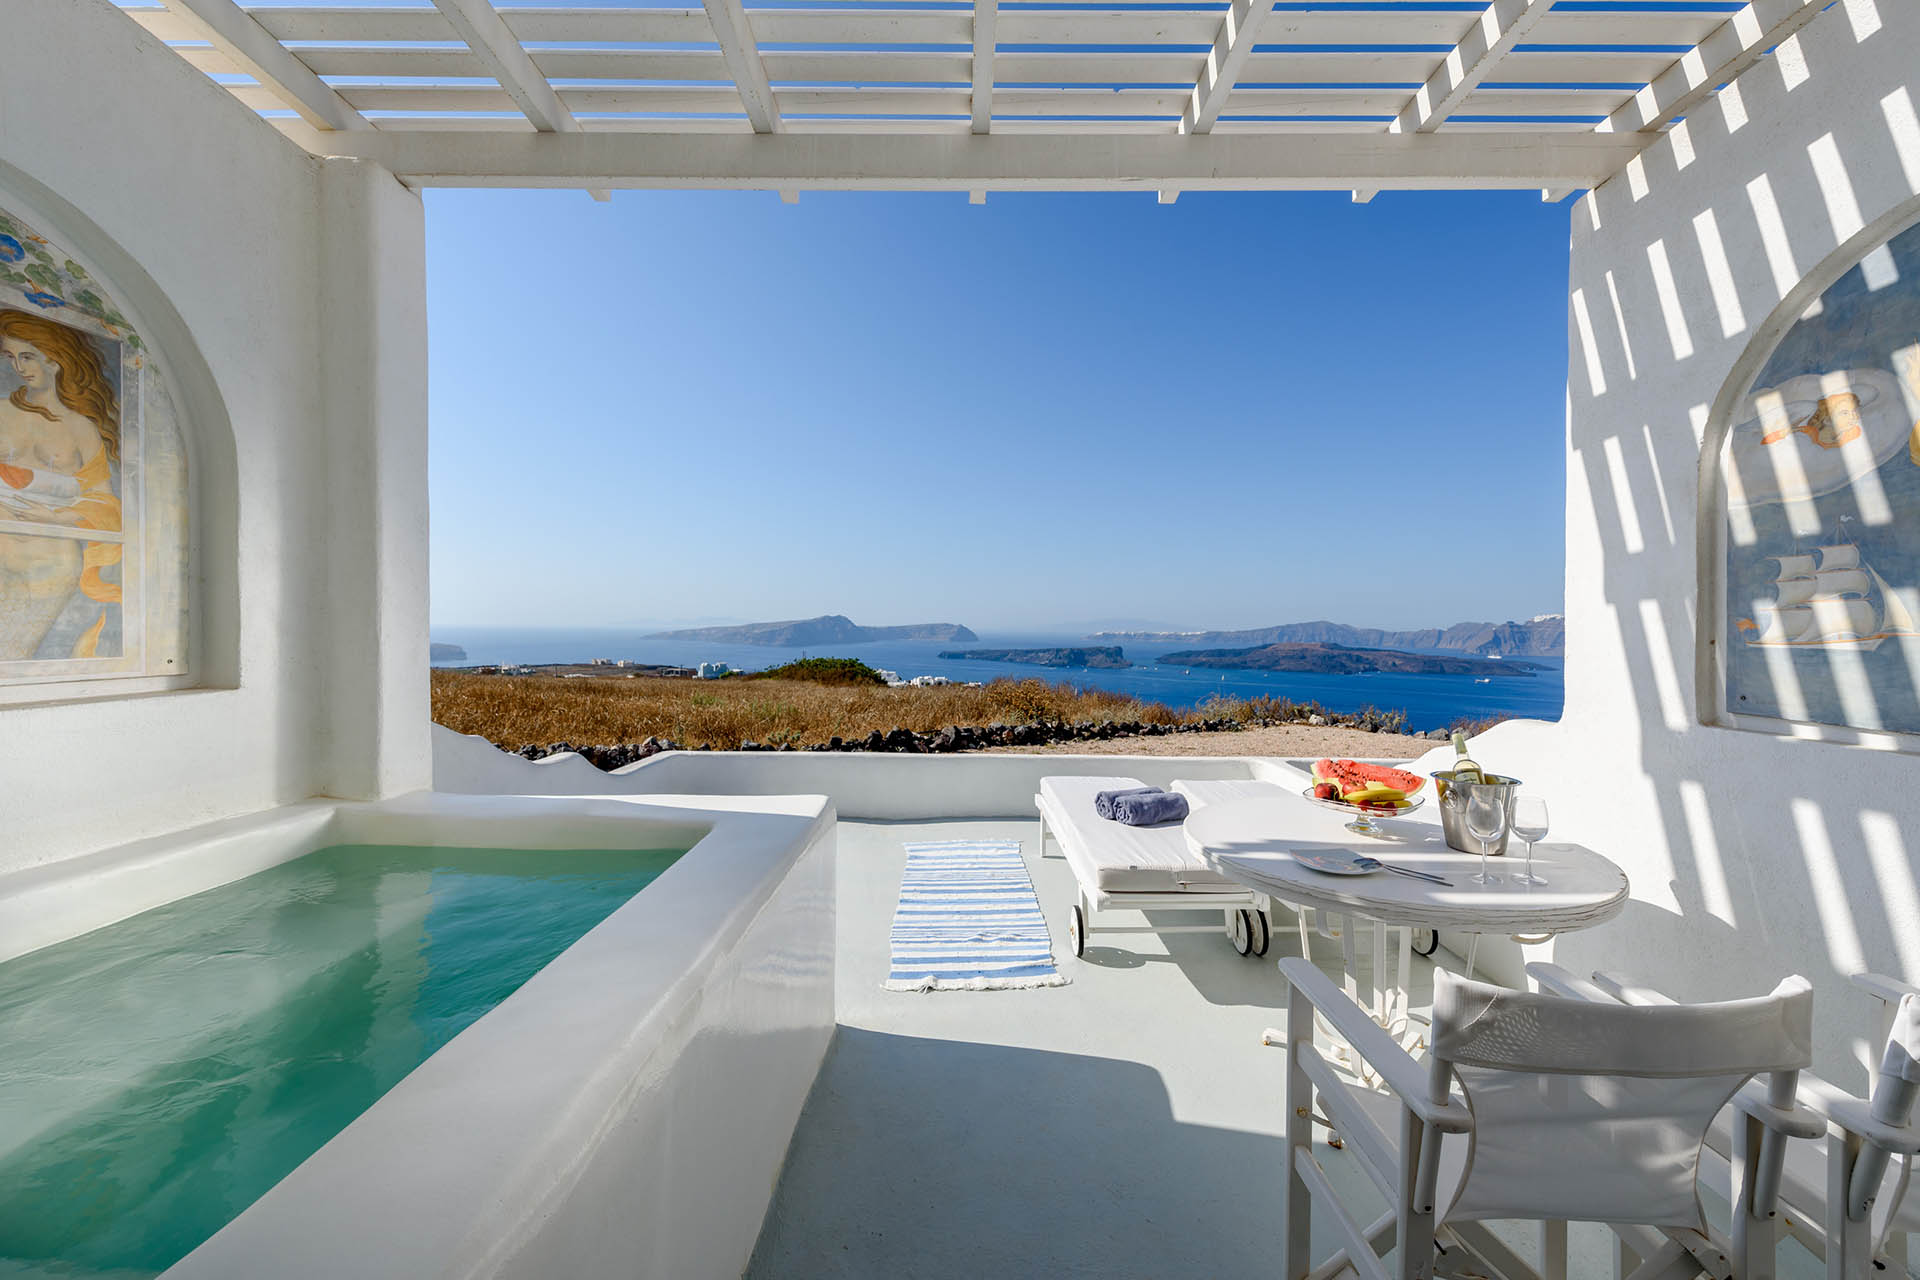 Kalestesia Suites - Deluxe Suite private veranda with heated Jacuzzi and caldera view